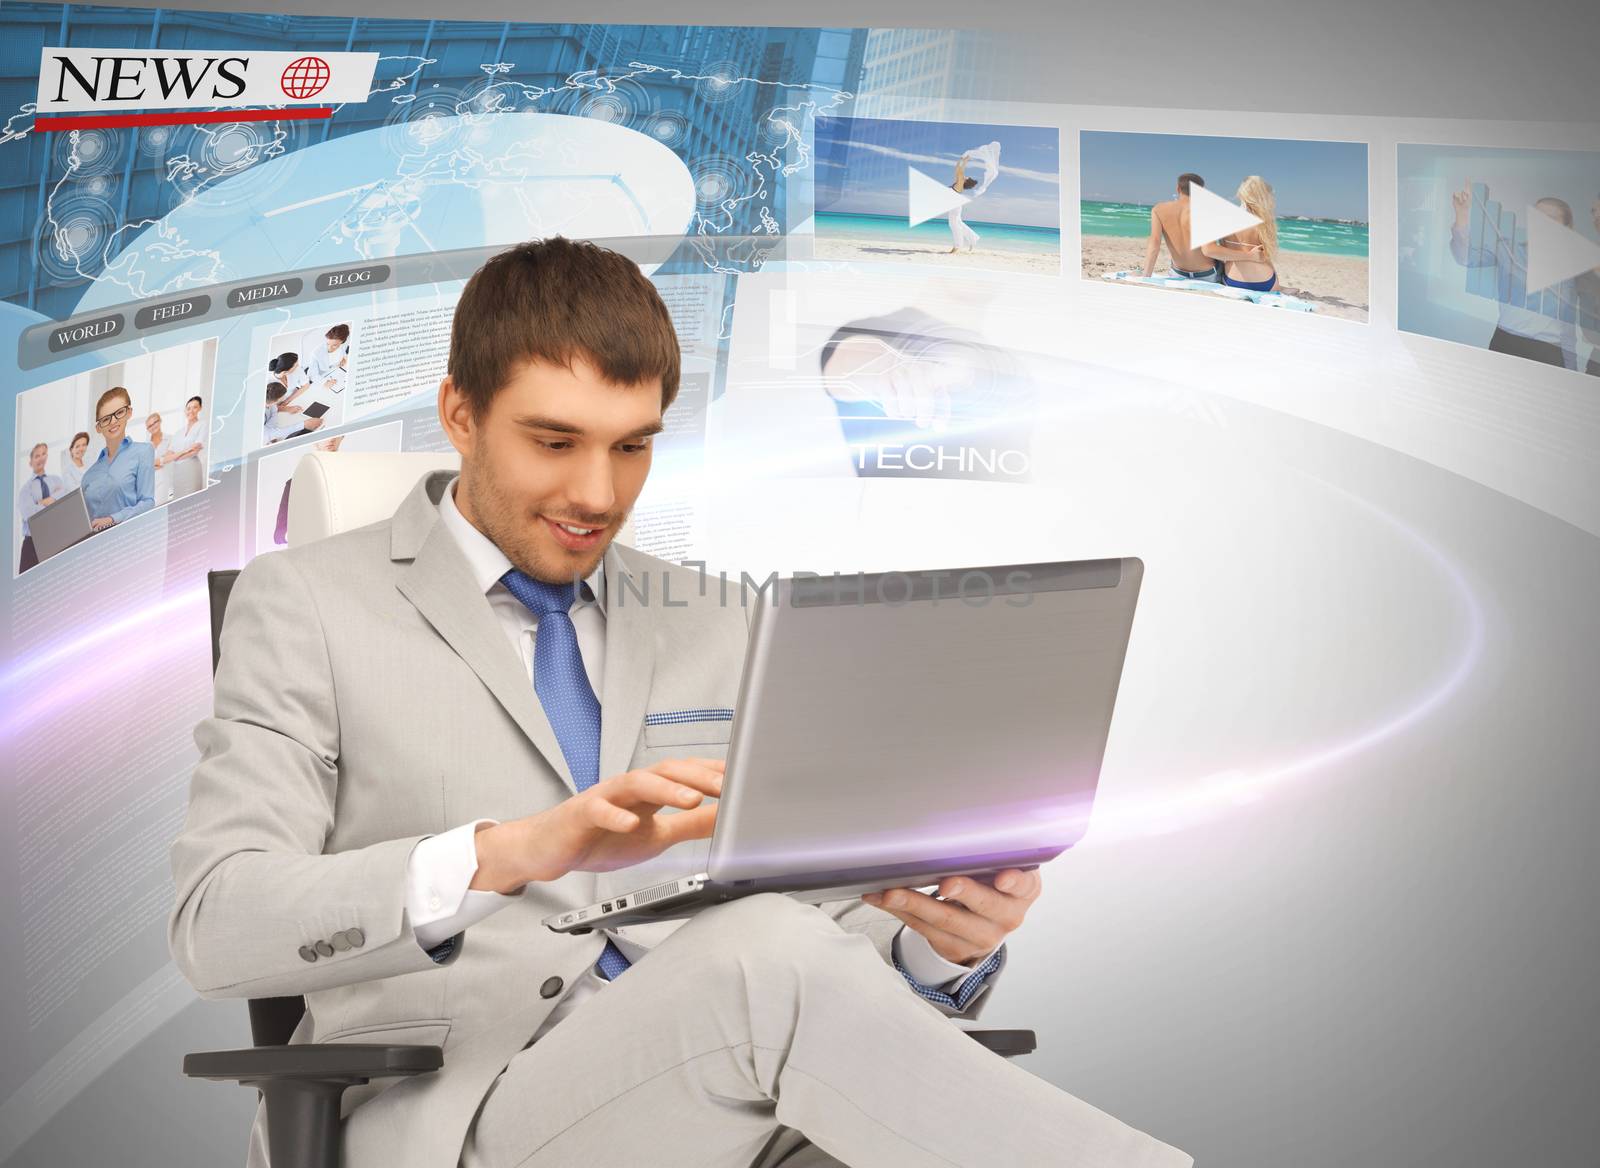 businessman with laptop pc reading news by dolgachov